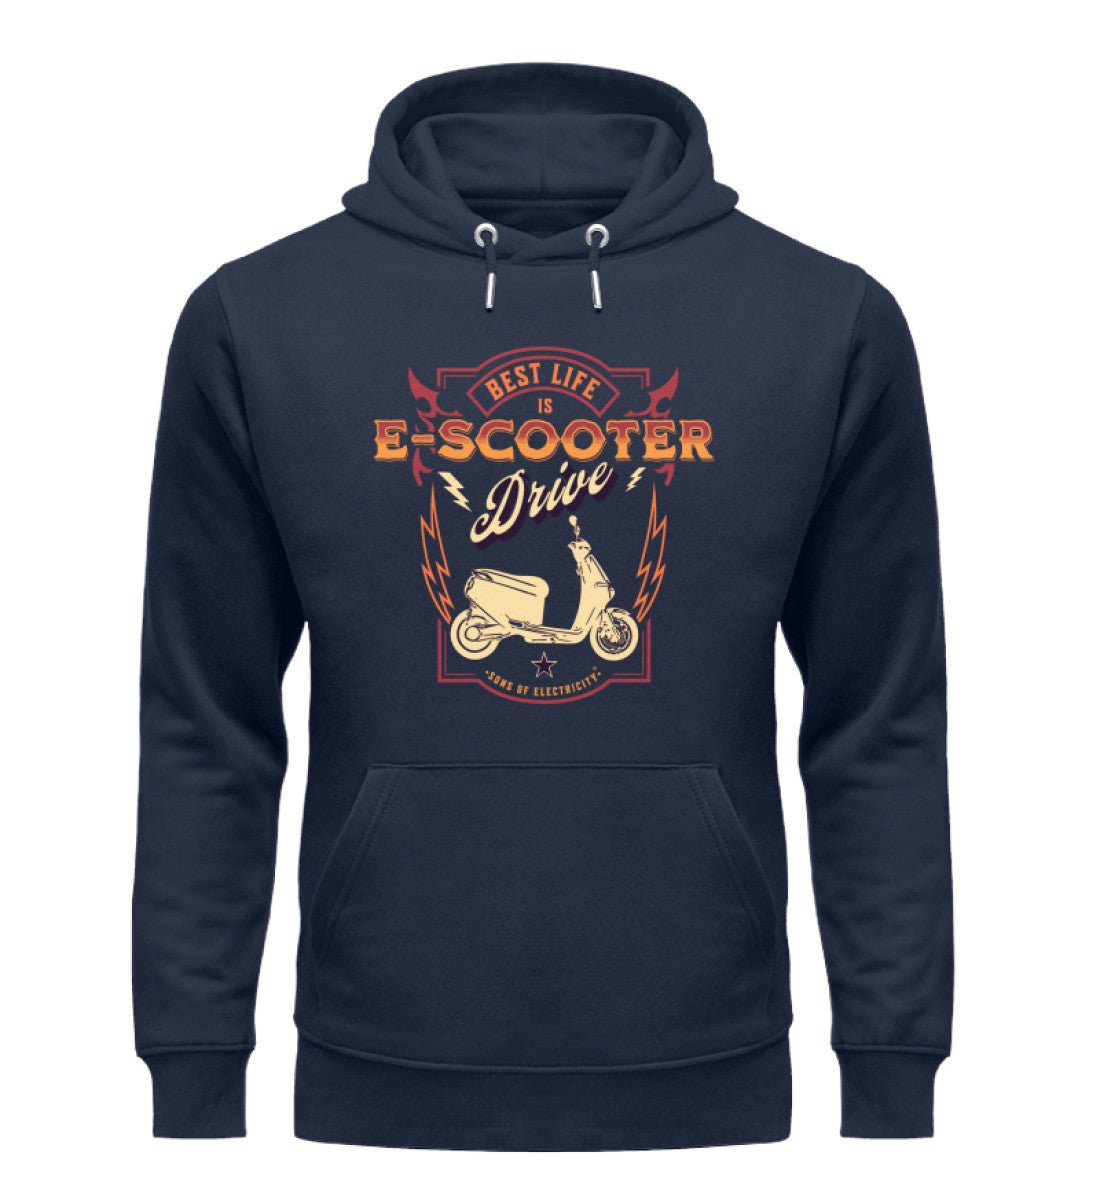 Bio Premium E-Motorroller Hoodie: Best Life is E-Scooter